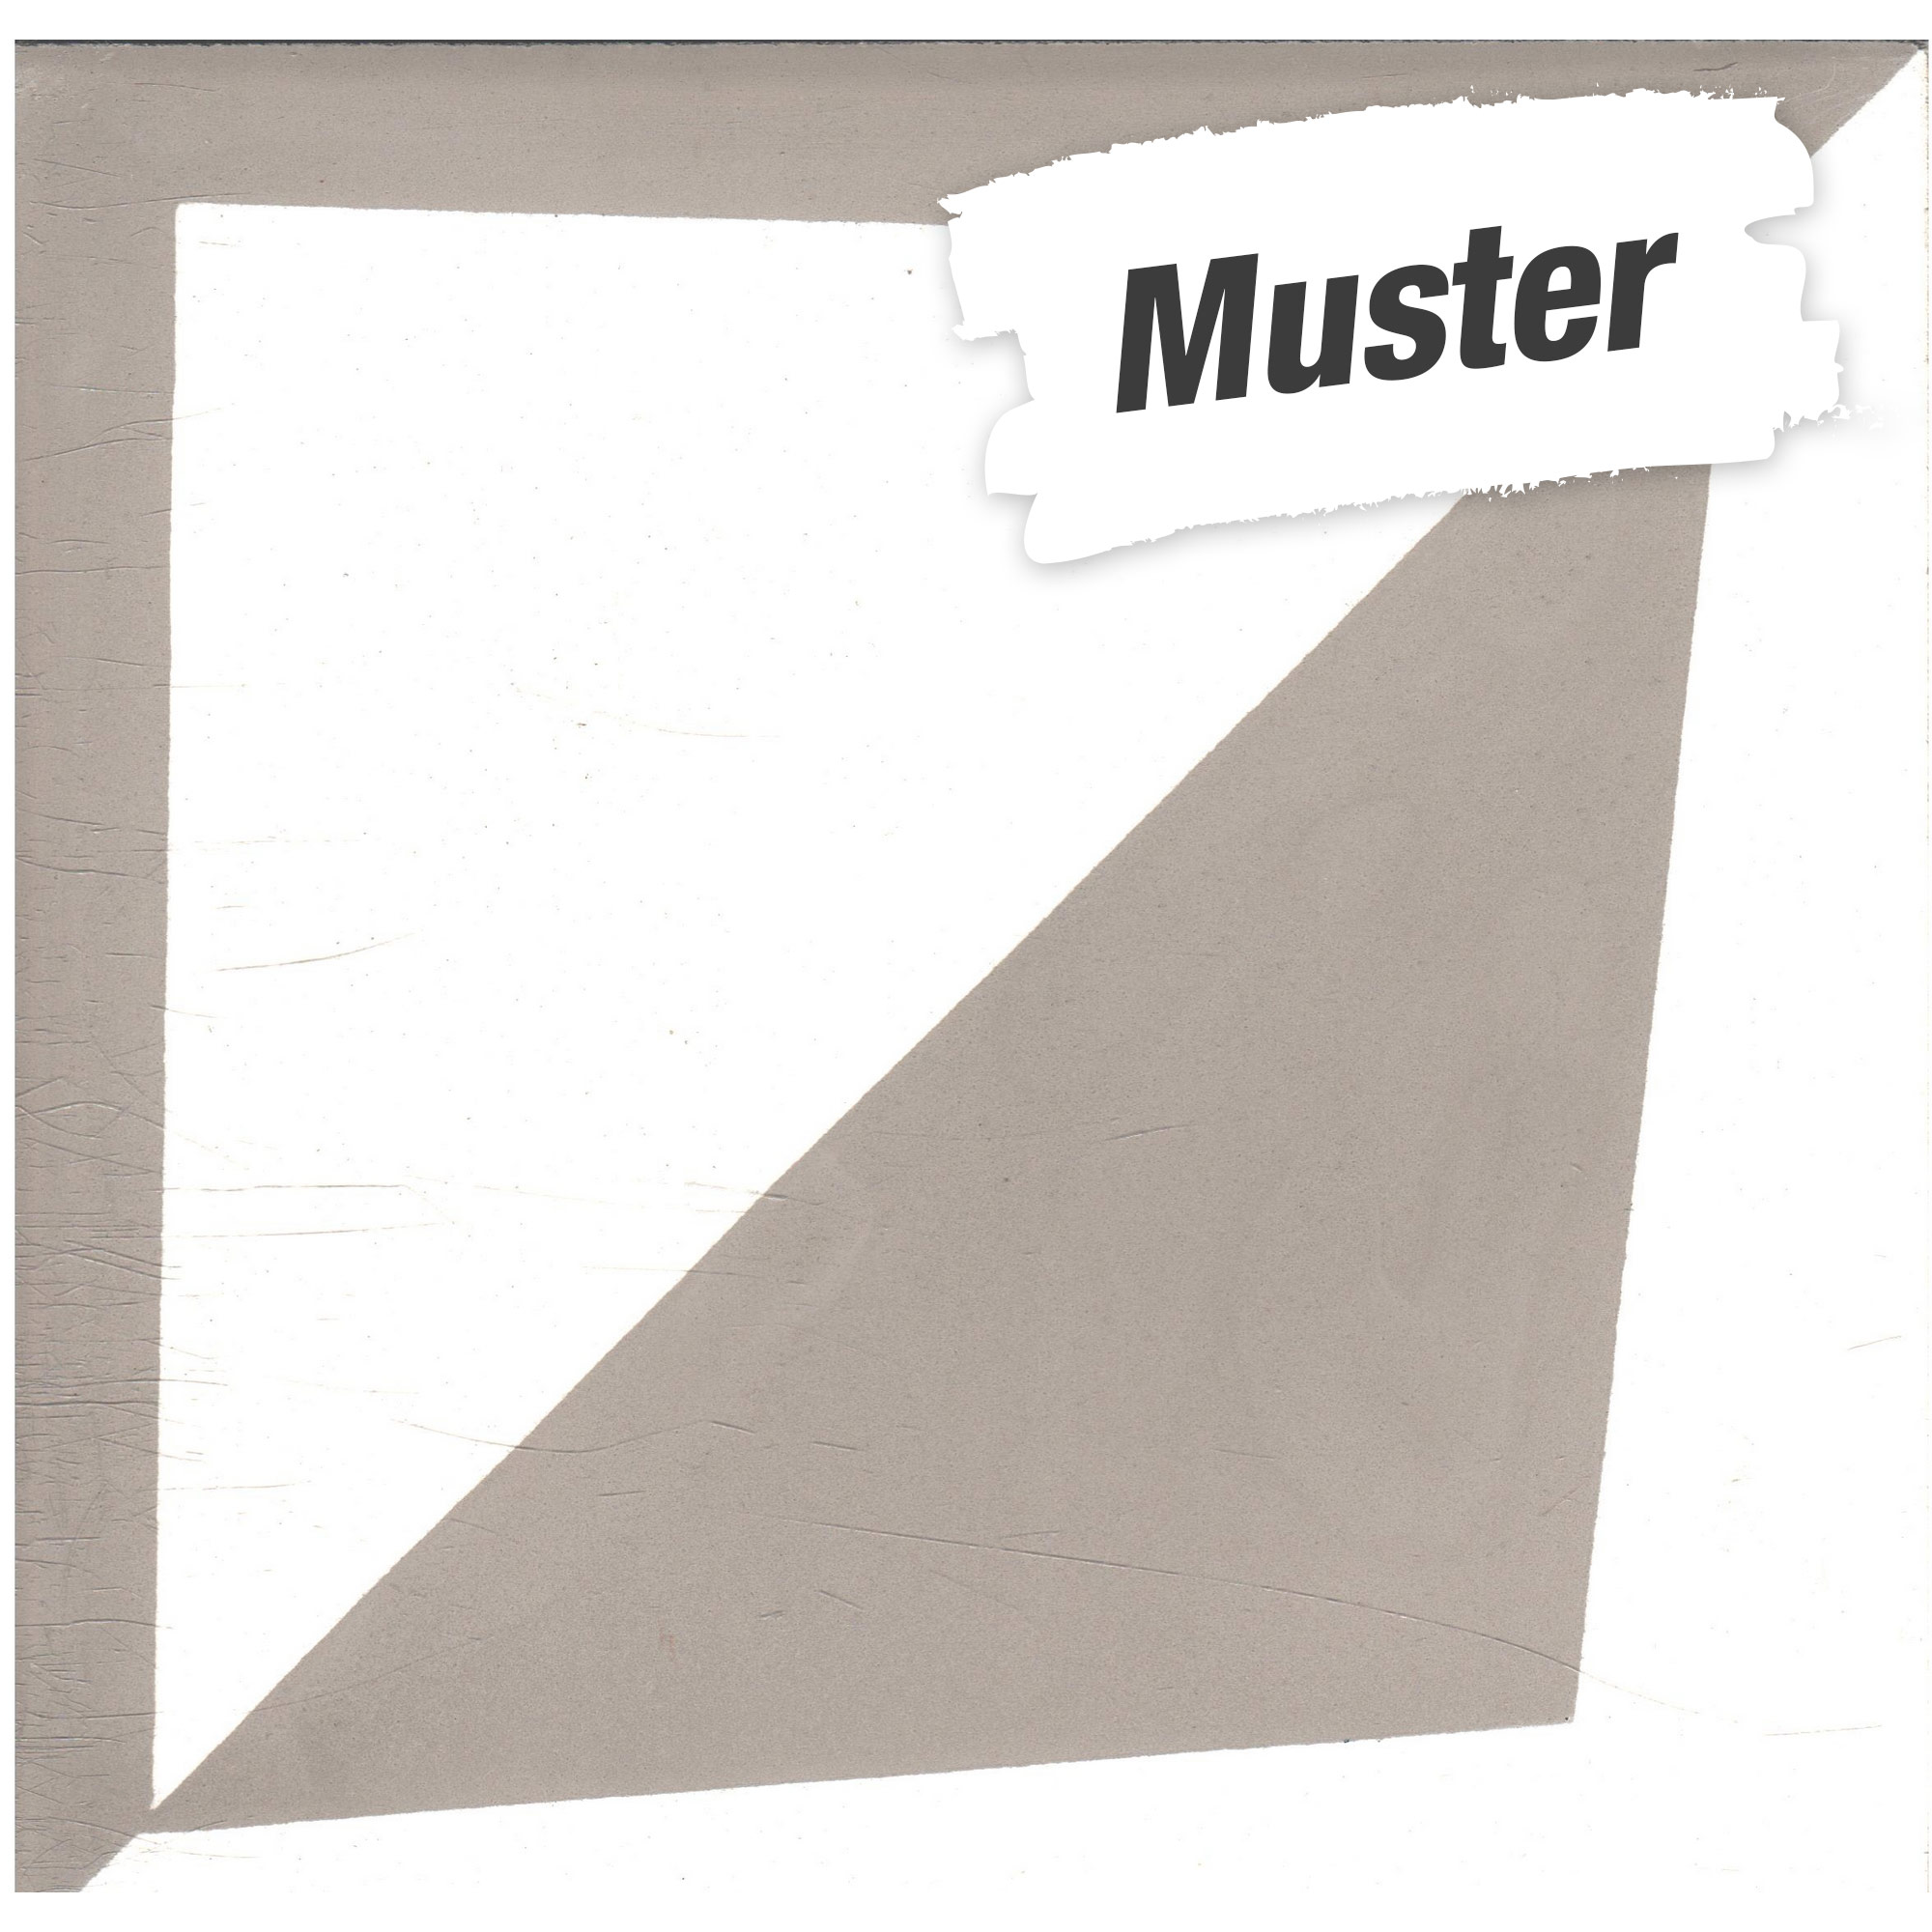 Muster zu Bodenfliese 'Cement' Zement braun/weiß 20 x 20 cm + product picture